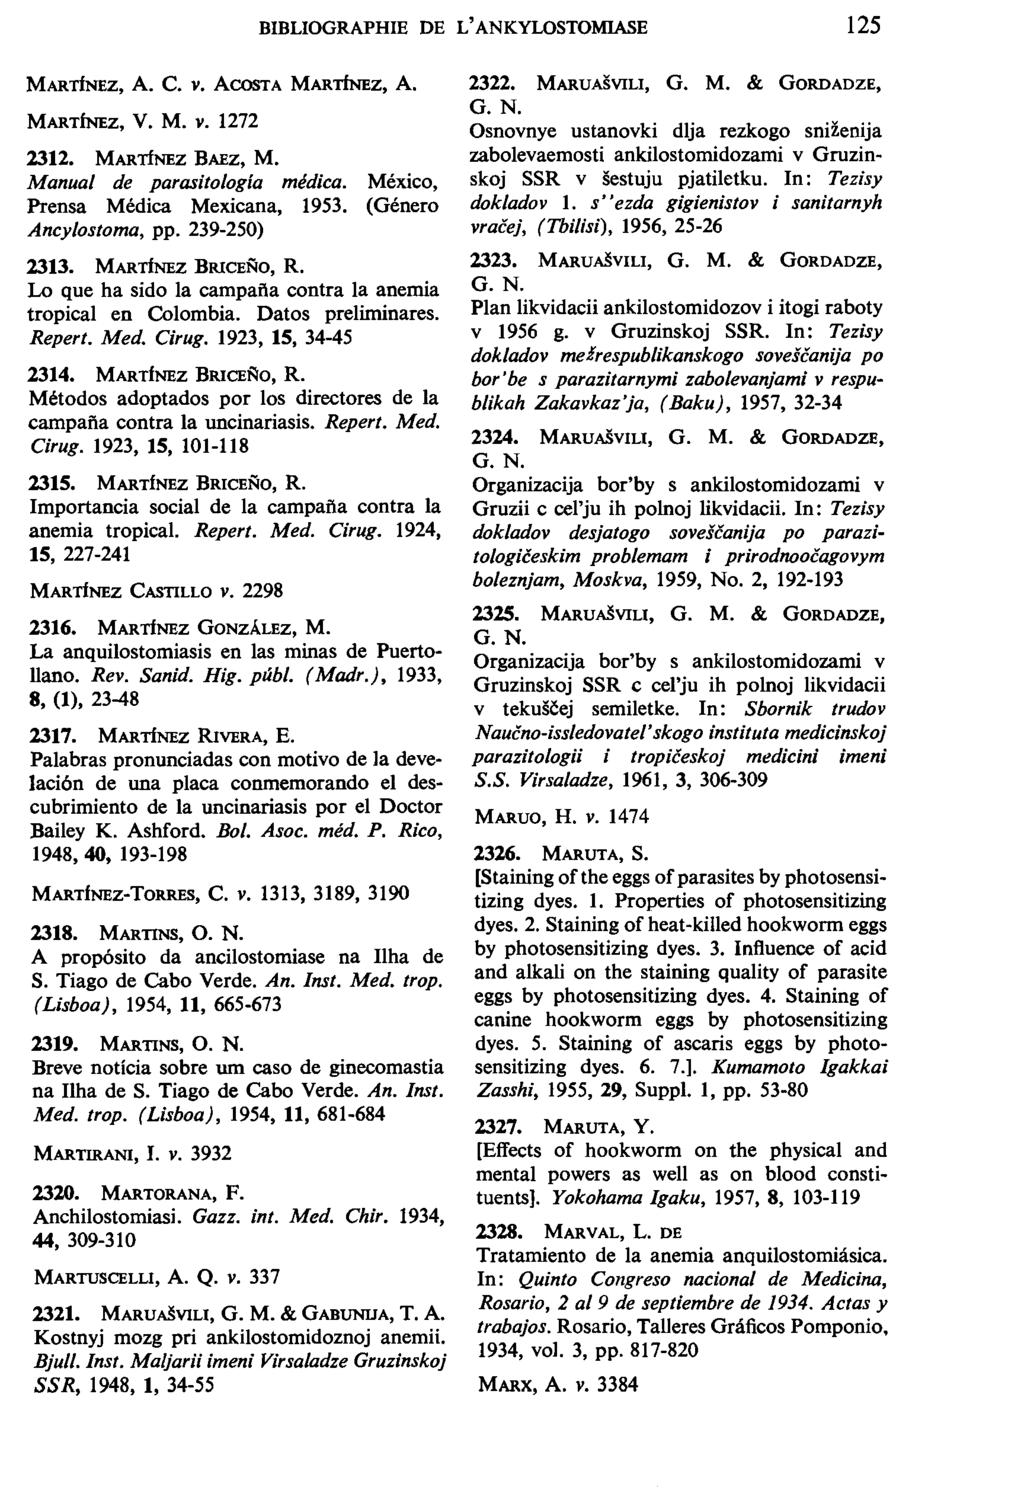 BIBLIOGRAPHIE DE L' ANKYLOSTOMIASE 125 MARTINEZ, A. c. v. ACOSTA MARTINEZ, A. MARTiNEz, V. M. v. 1272 2312. MARTINEZ BAEZ, M. Manual de parasito/ogia medica. Mexico, Prensa Medica Mexicana, 1953.